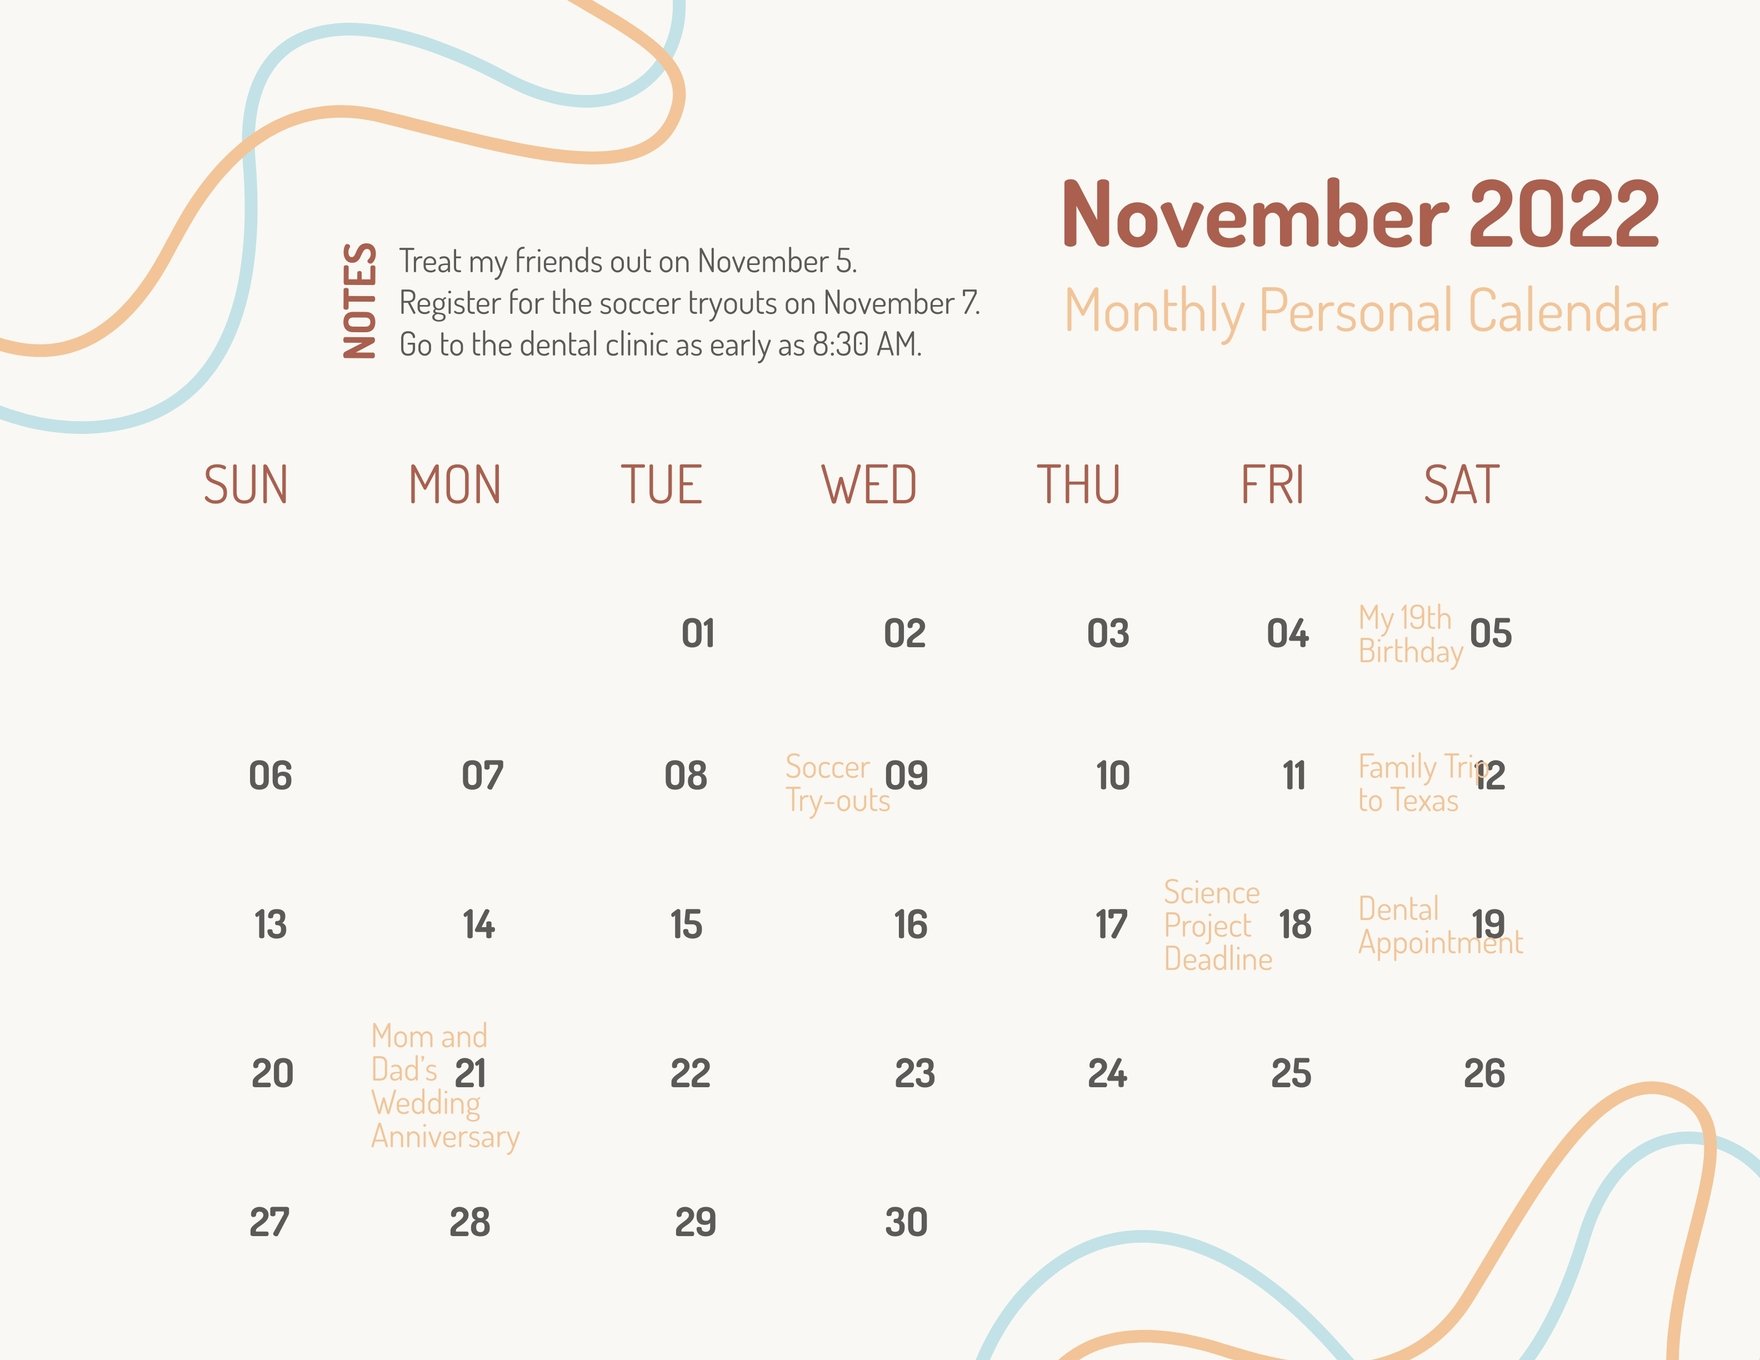 November 2022 Calendar Template in Word, Illustrator, PSD